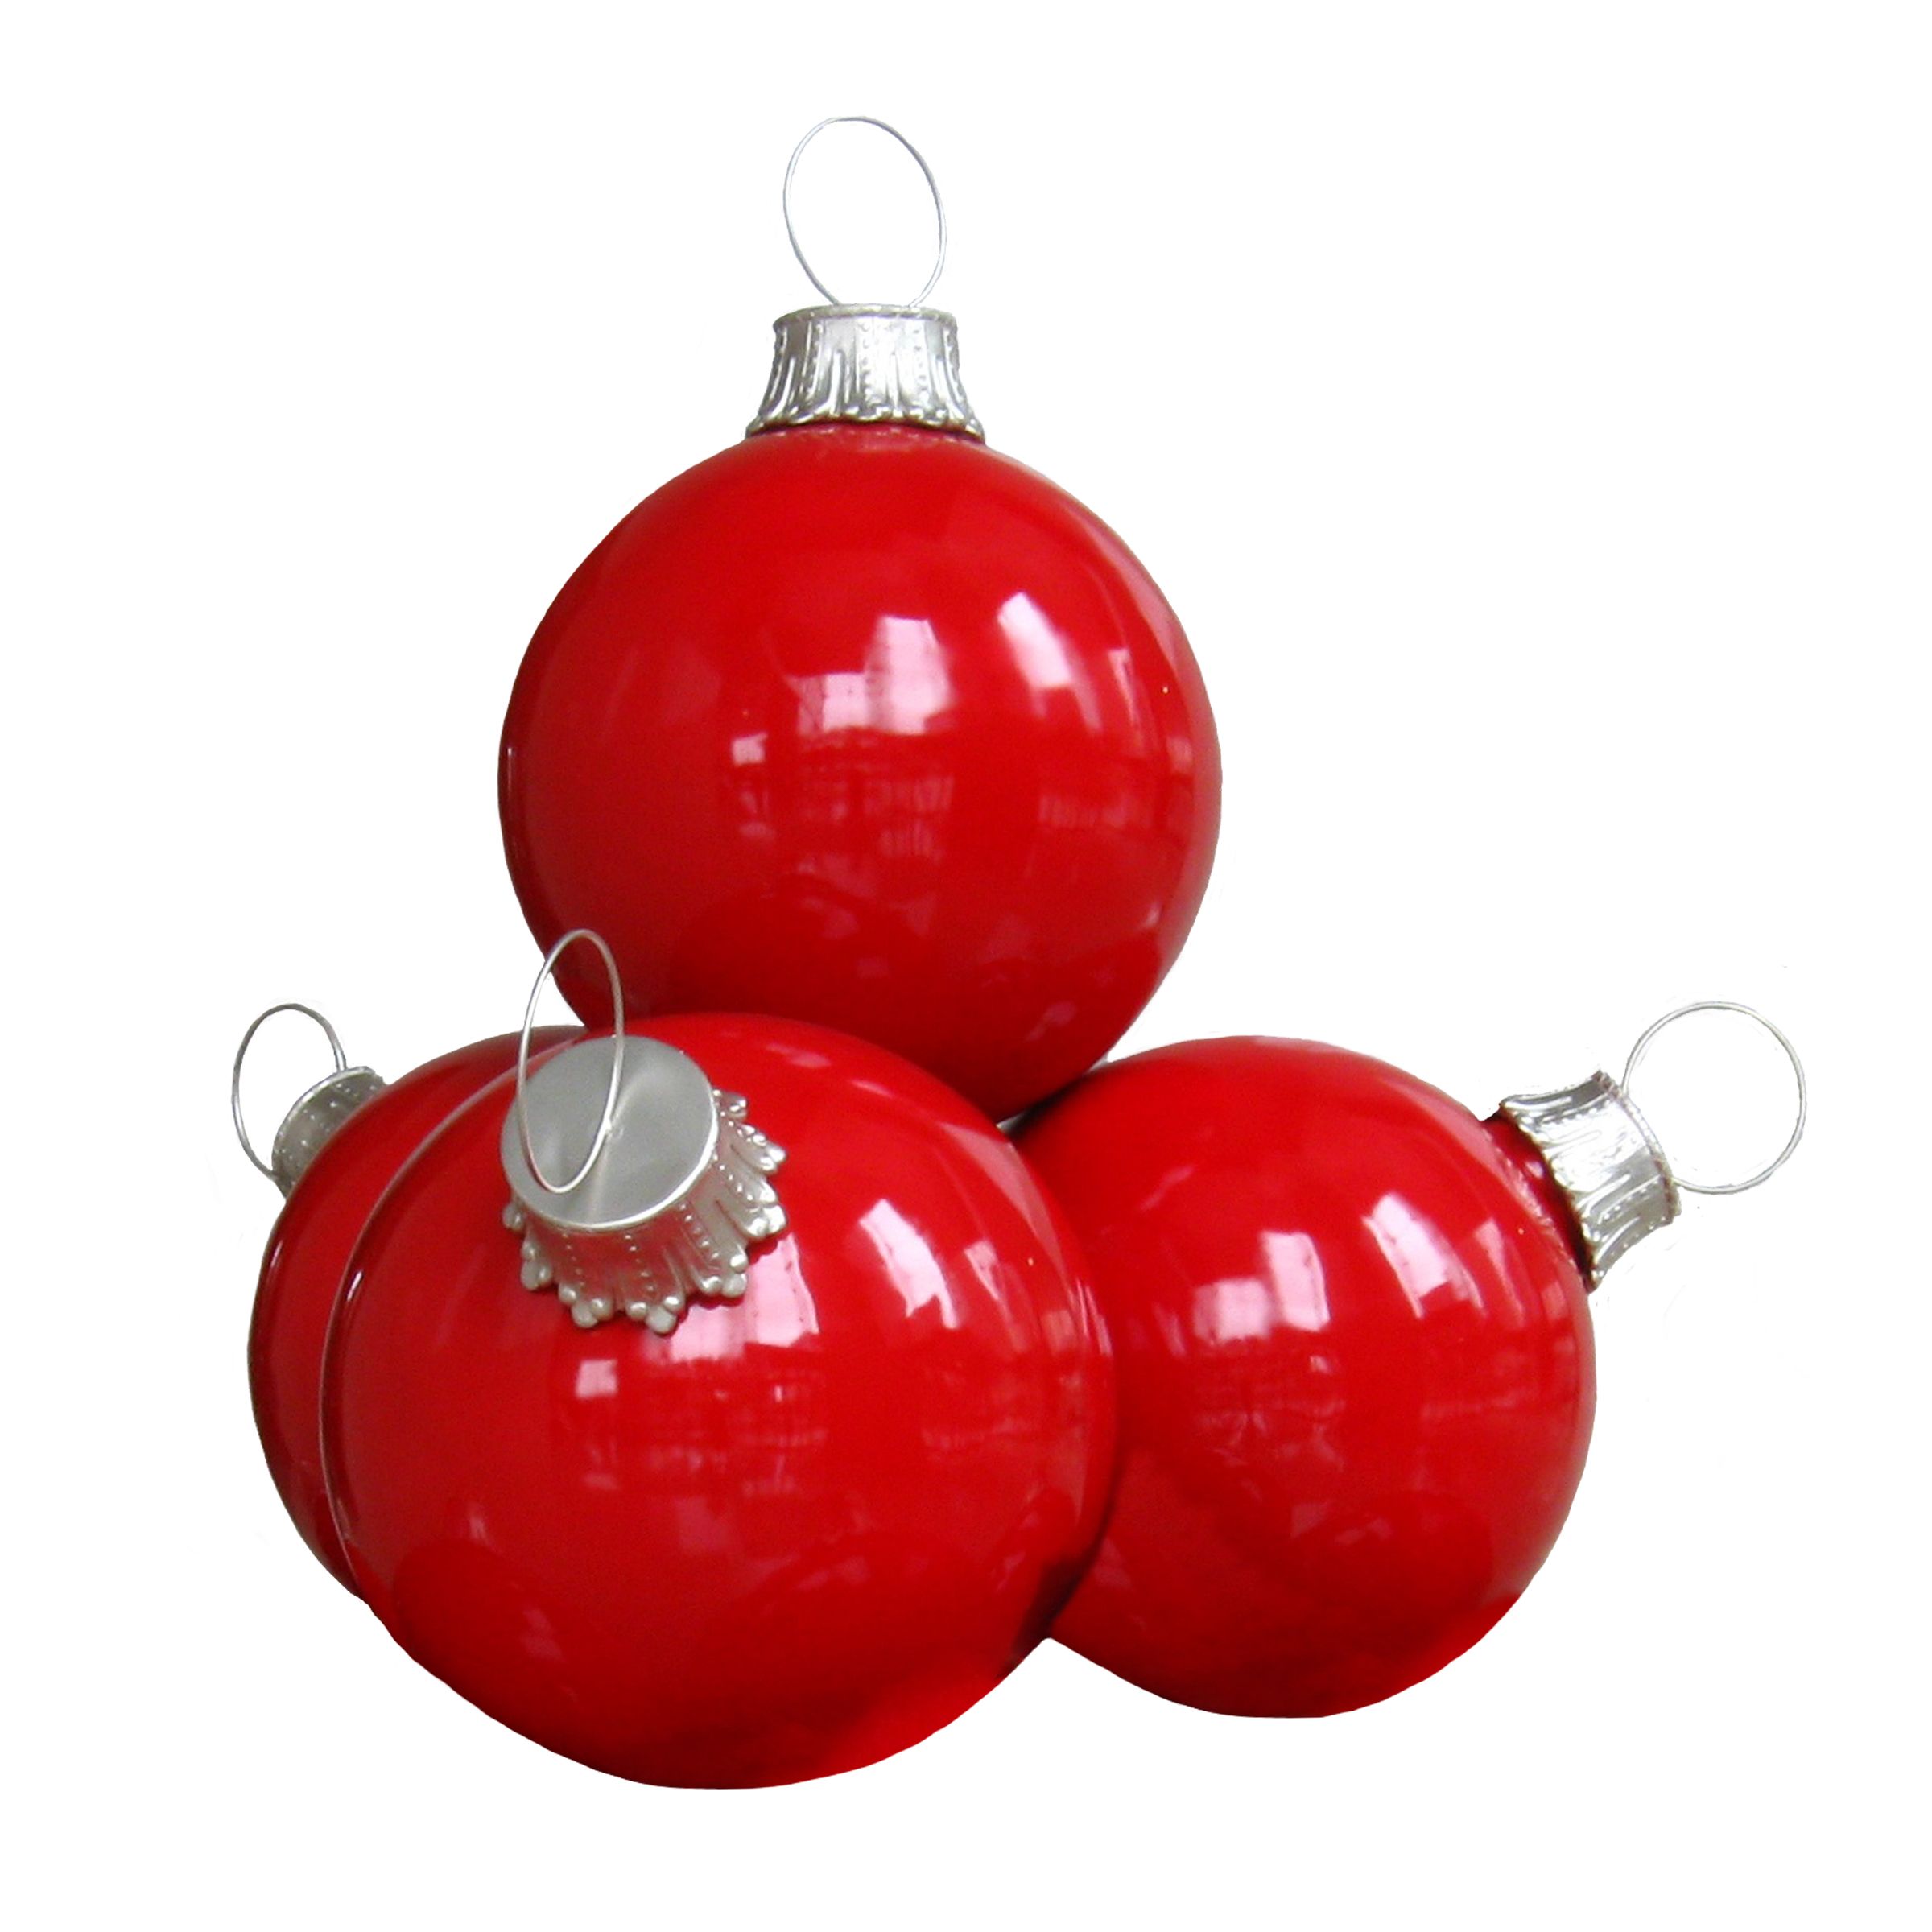 Oversized fiberglass ornaments in red